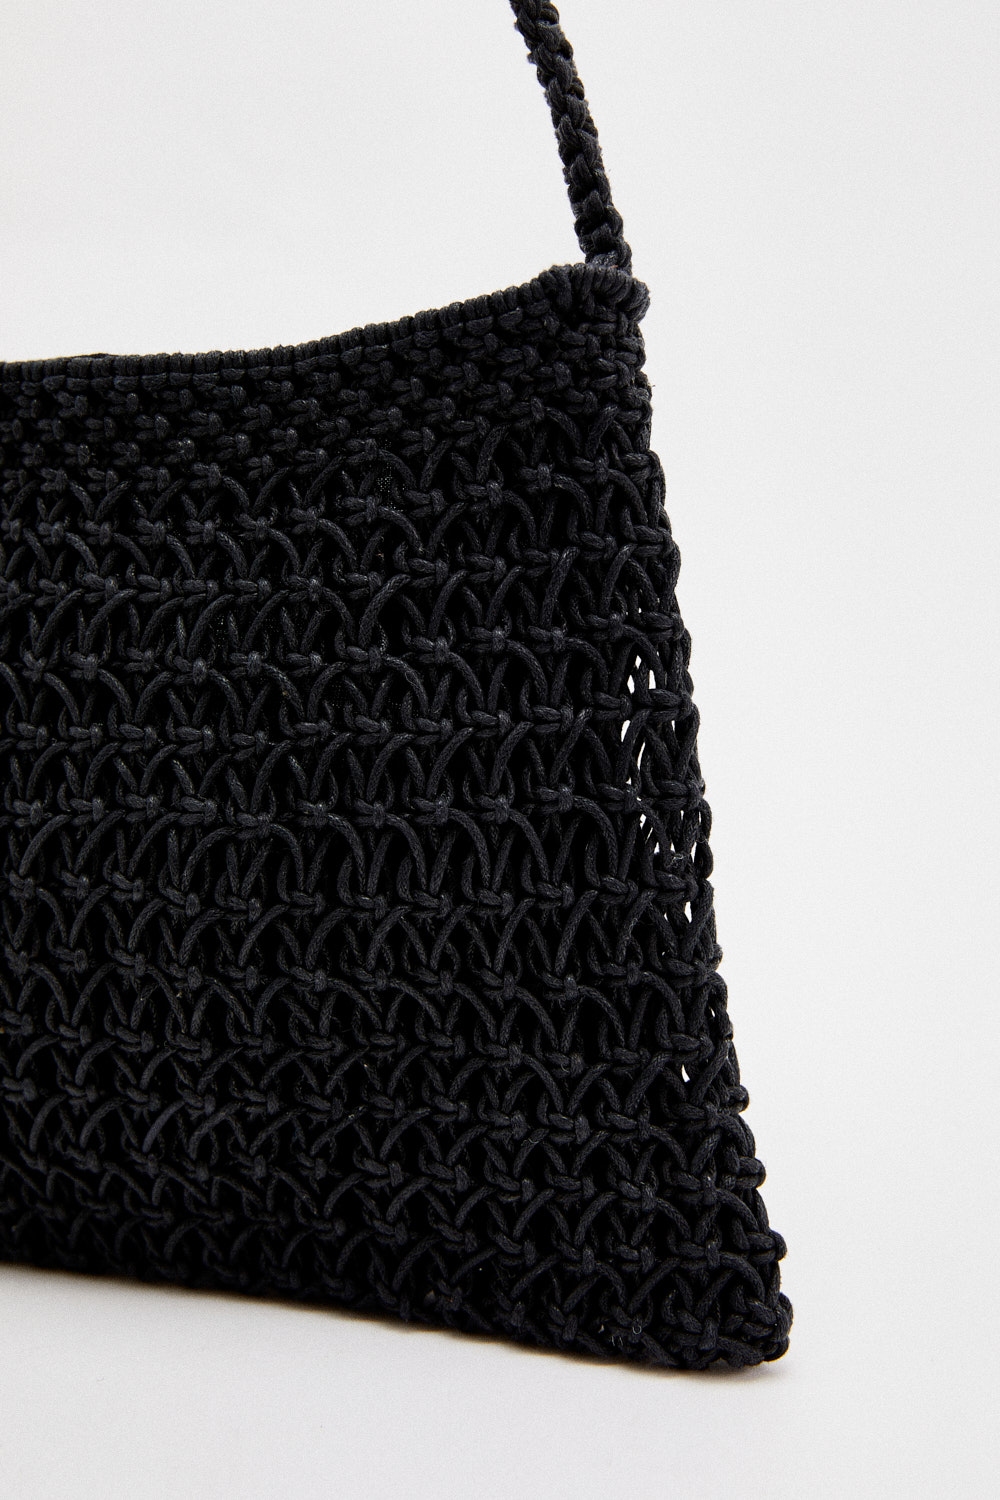 crochet algodón negro